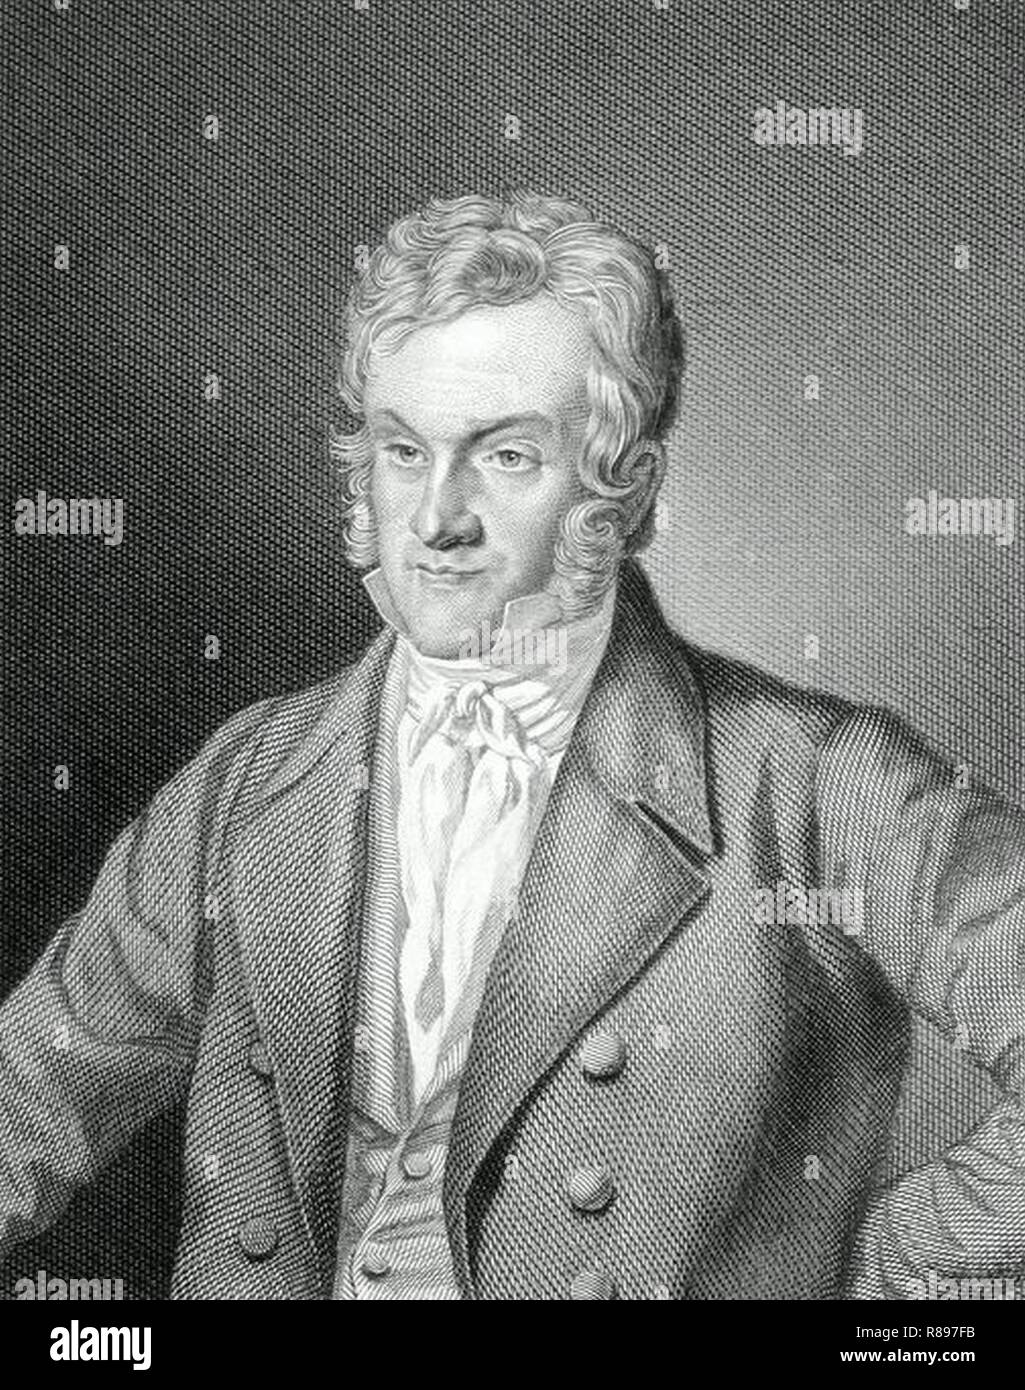 Carl joseph anton mittermaier 1850. Stock Photo